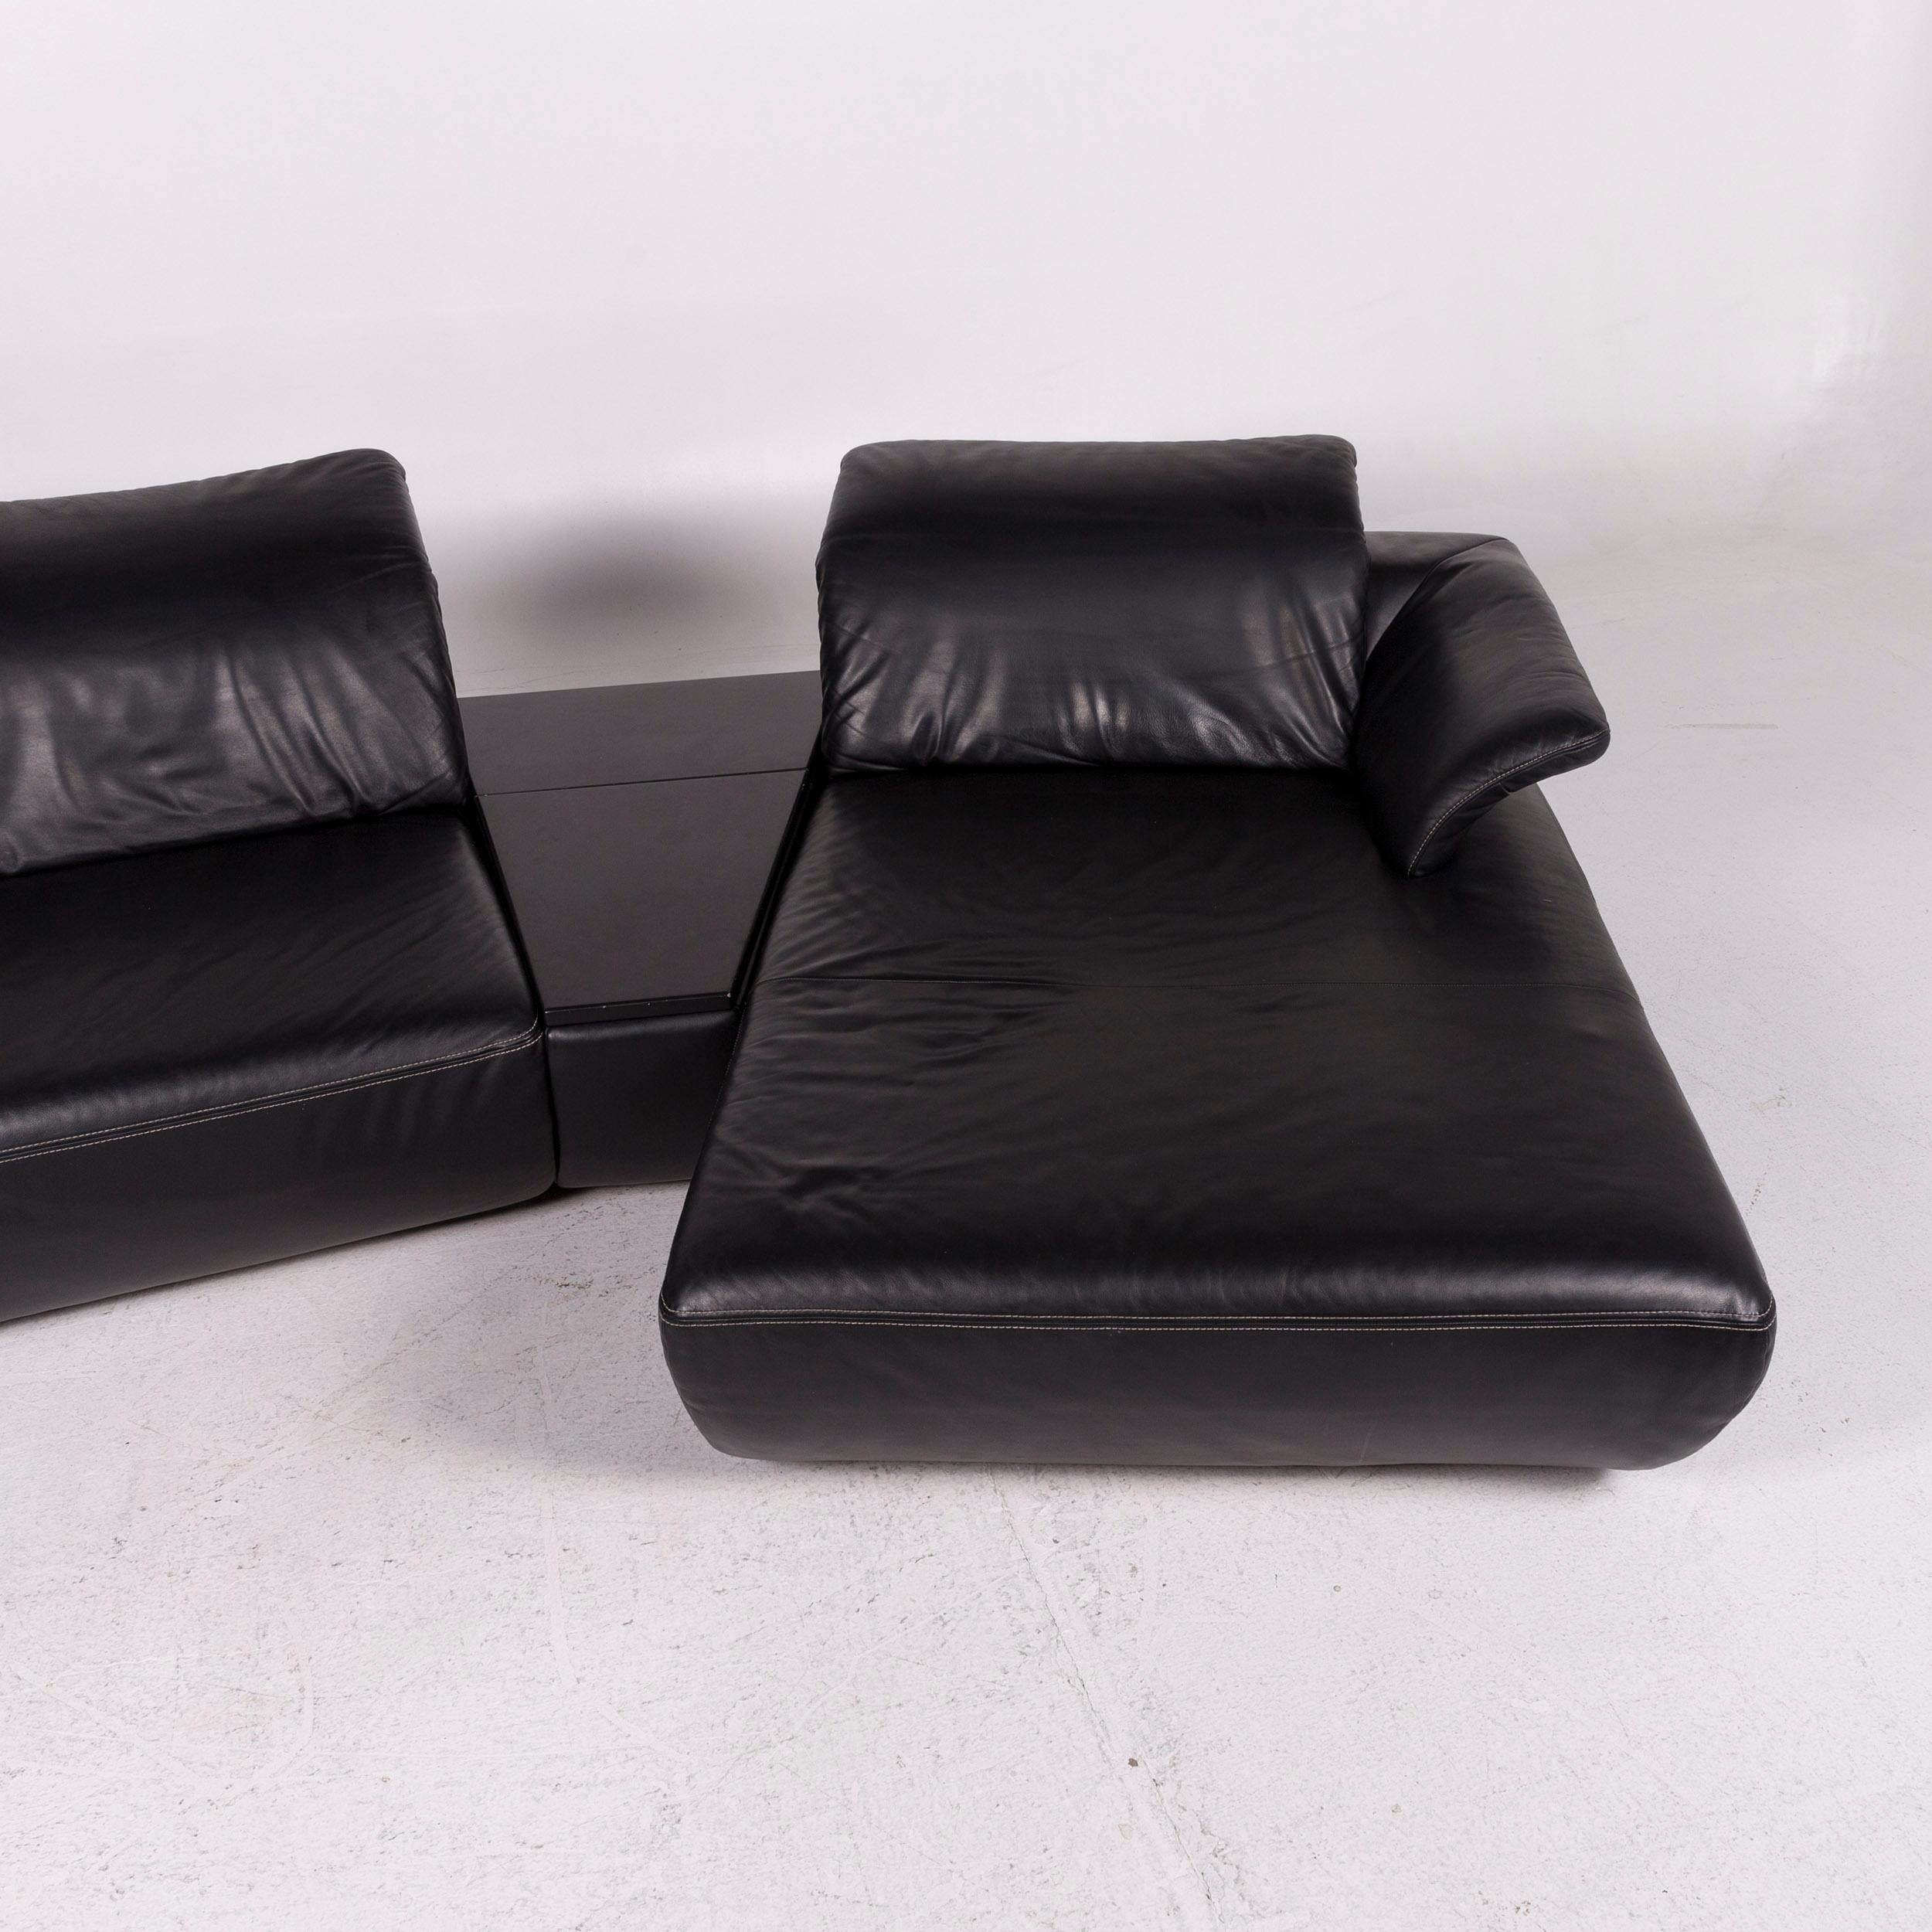 Koinor Avanti Leather Sofa Set Black 1 Corner Sofa 1 Stool Function 5